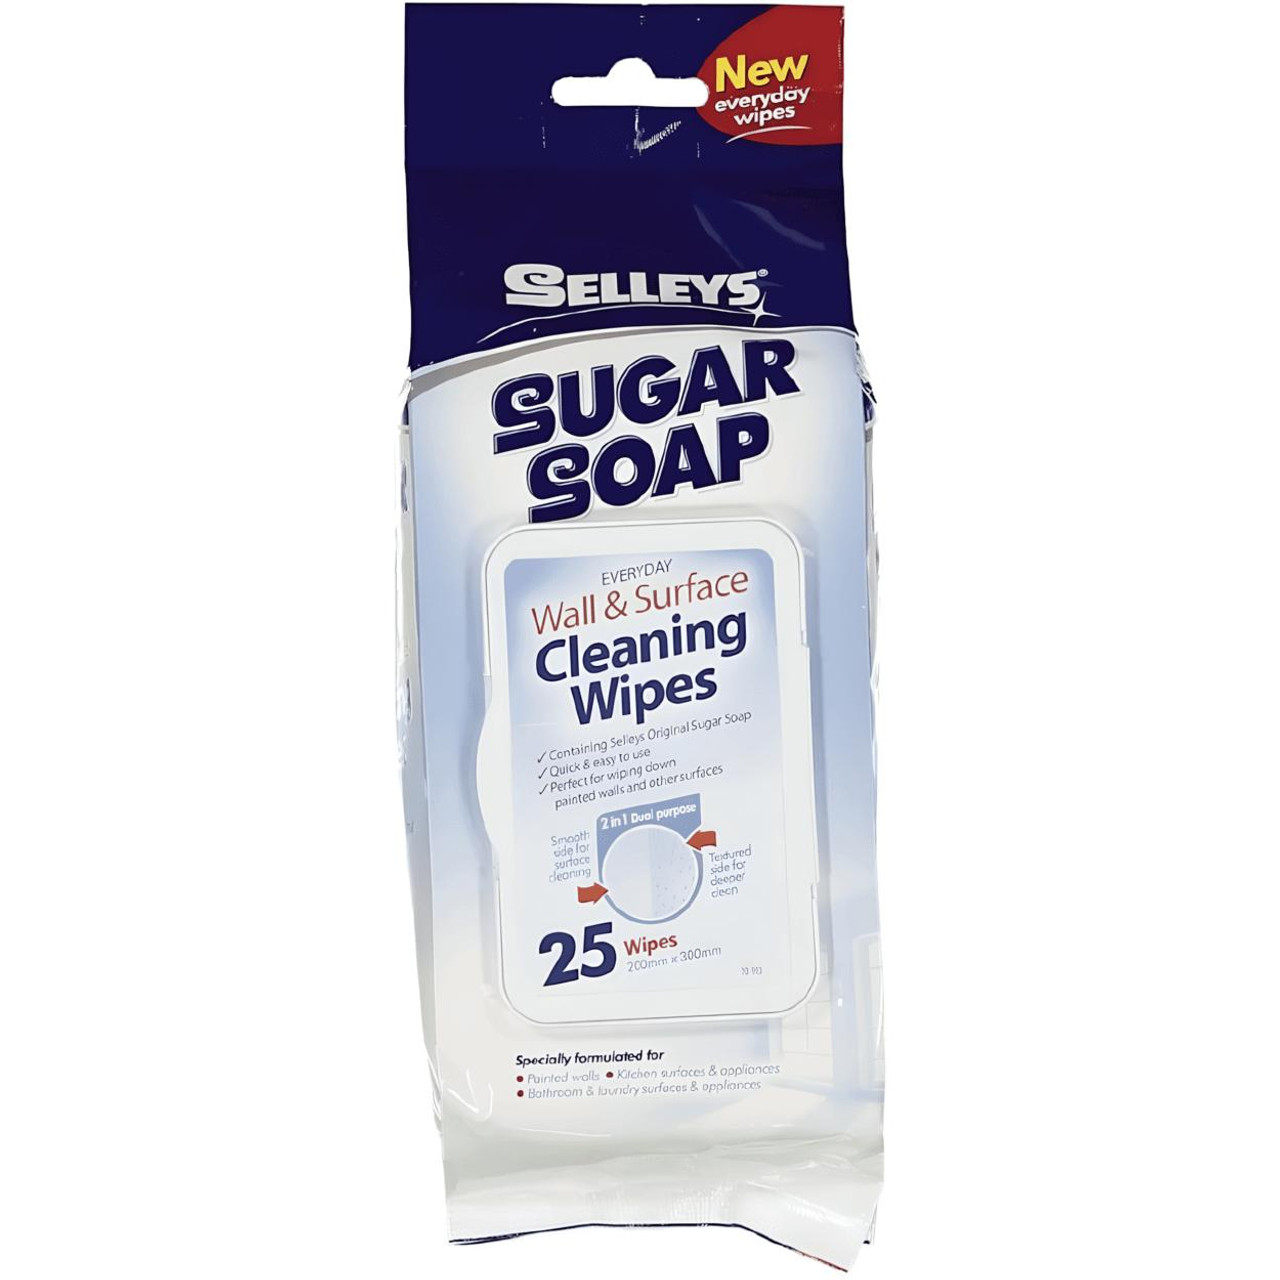  Selleys Sugar Soap Wipes 